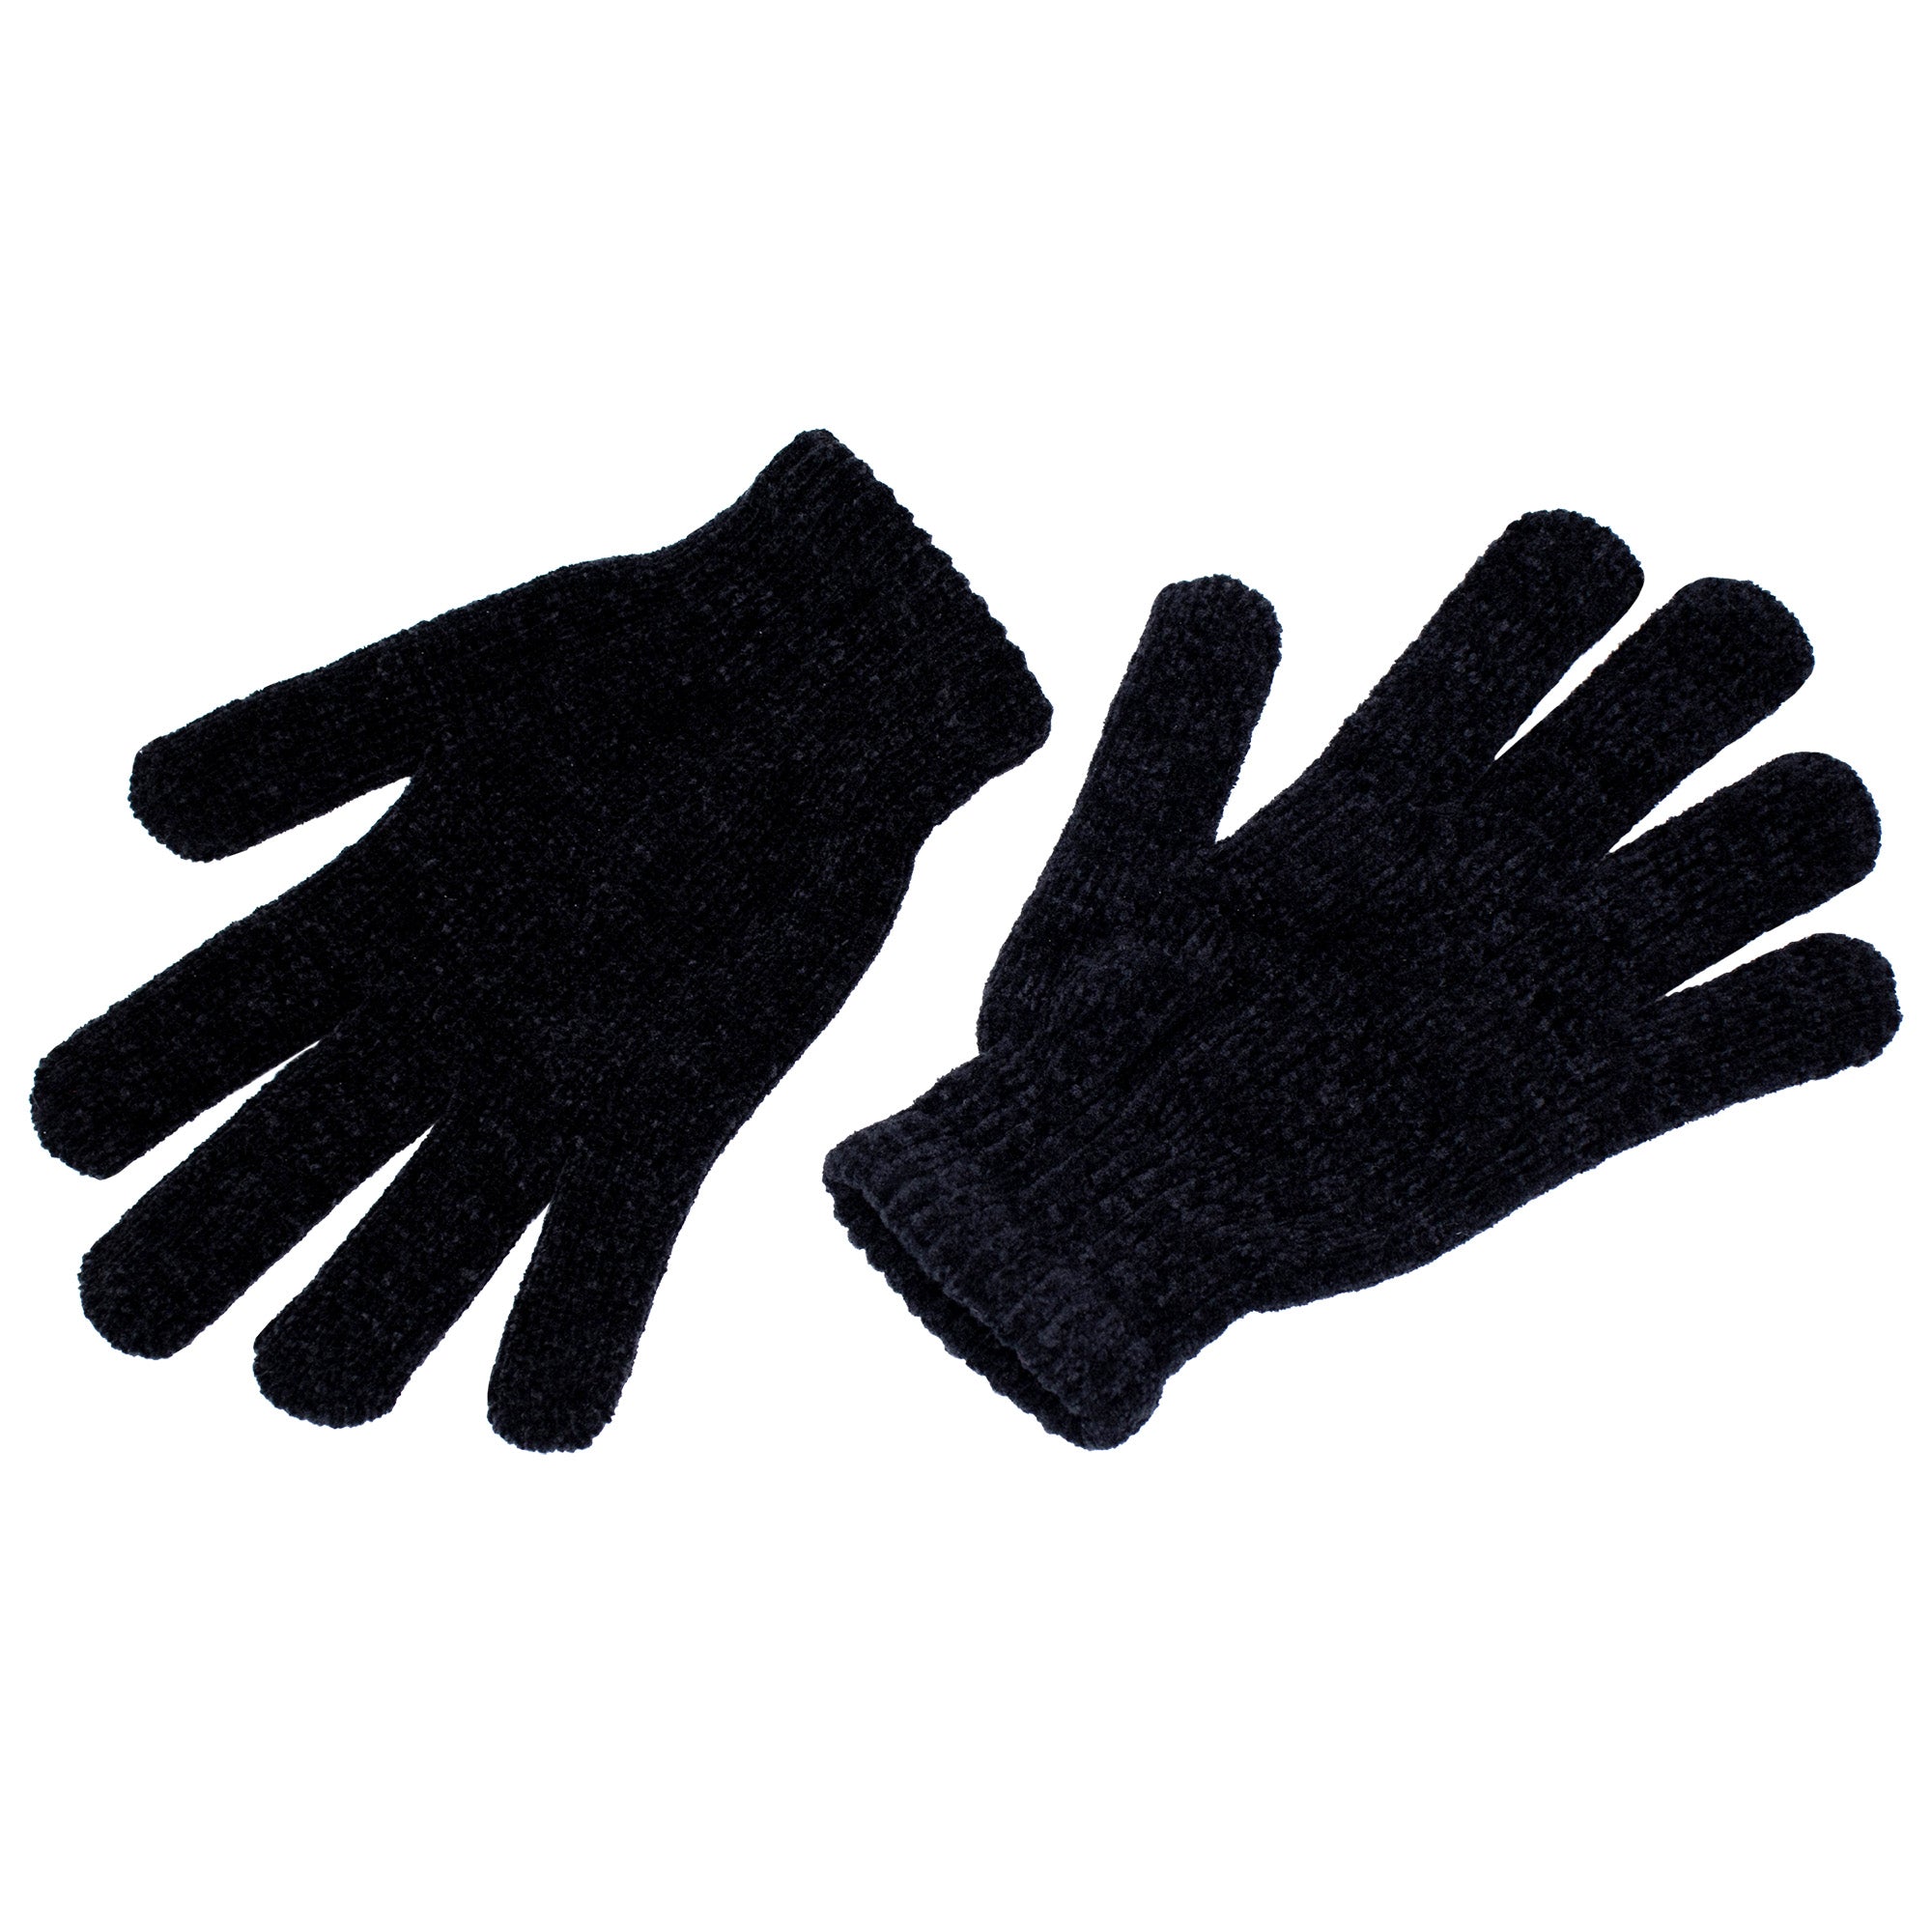 Unisex Wholesale Chenille Gloves in Black - Bulk Case of 96 Pairs